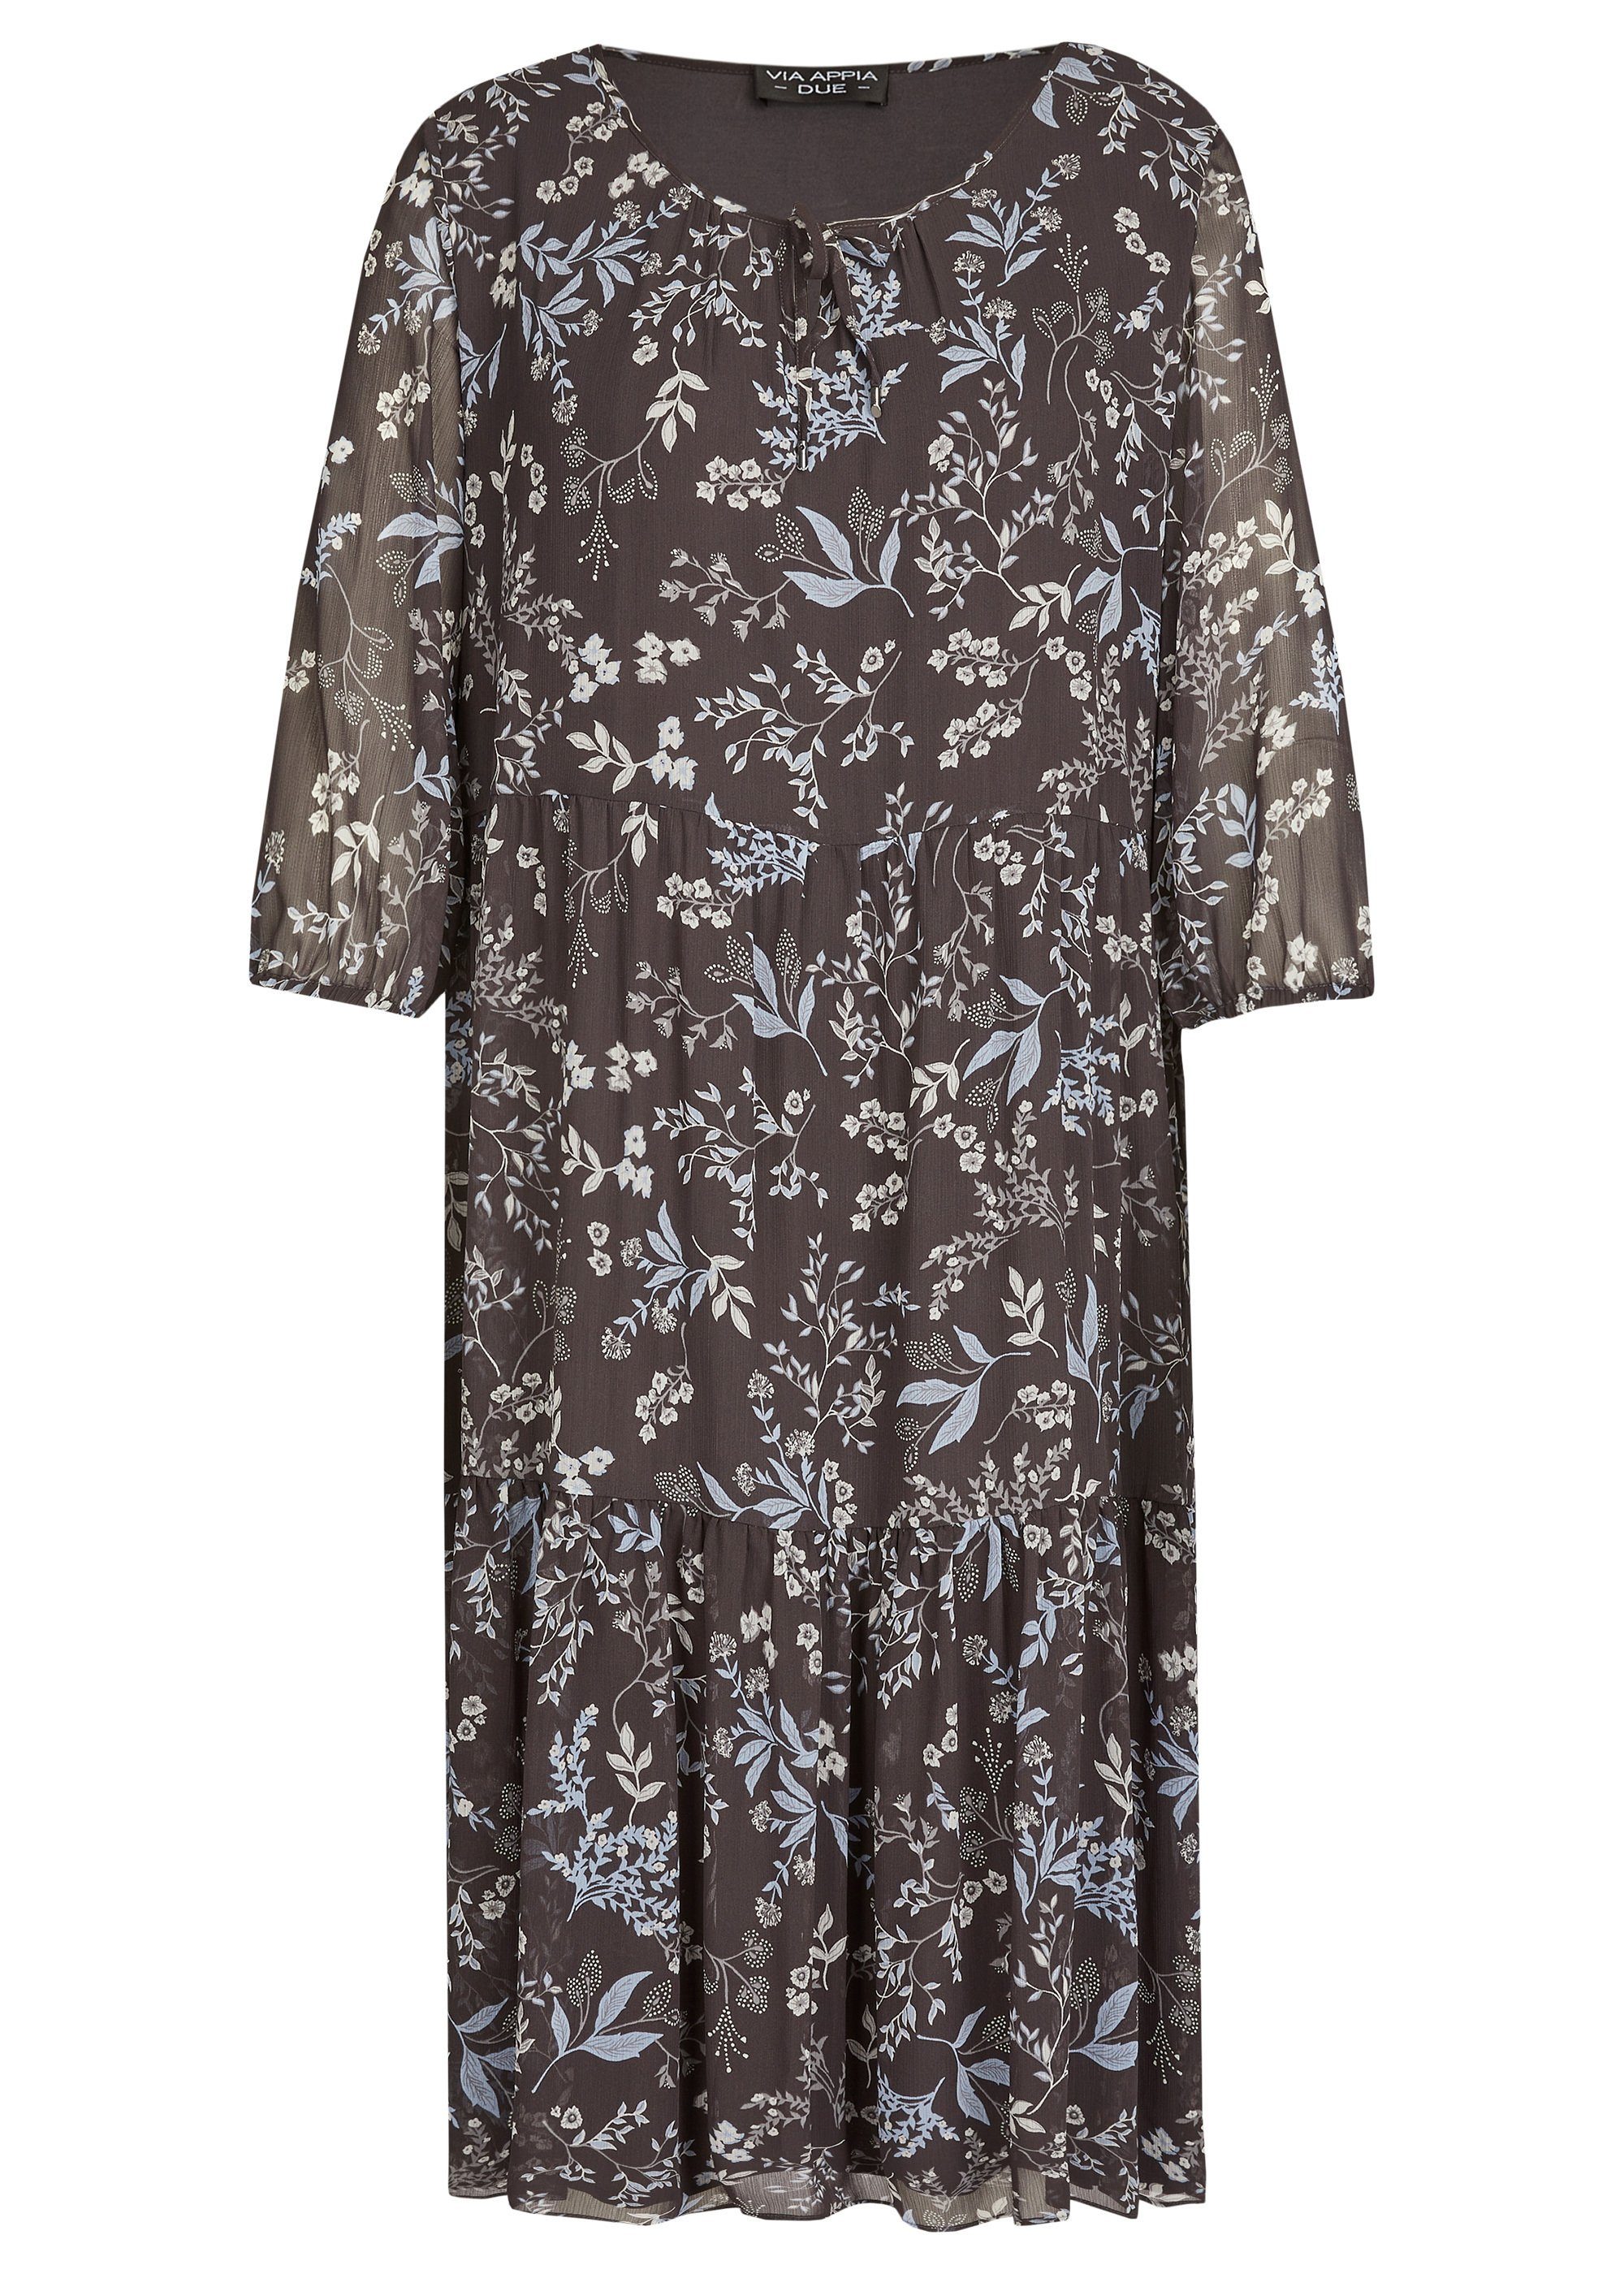 VIA APPIA DUE A-Linien-Kleid Verspieltes Stufenkleid mit floralem Allover-Print